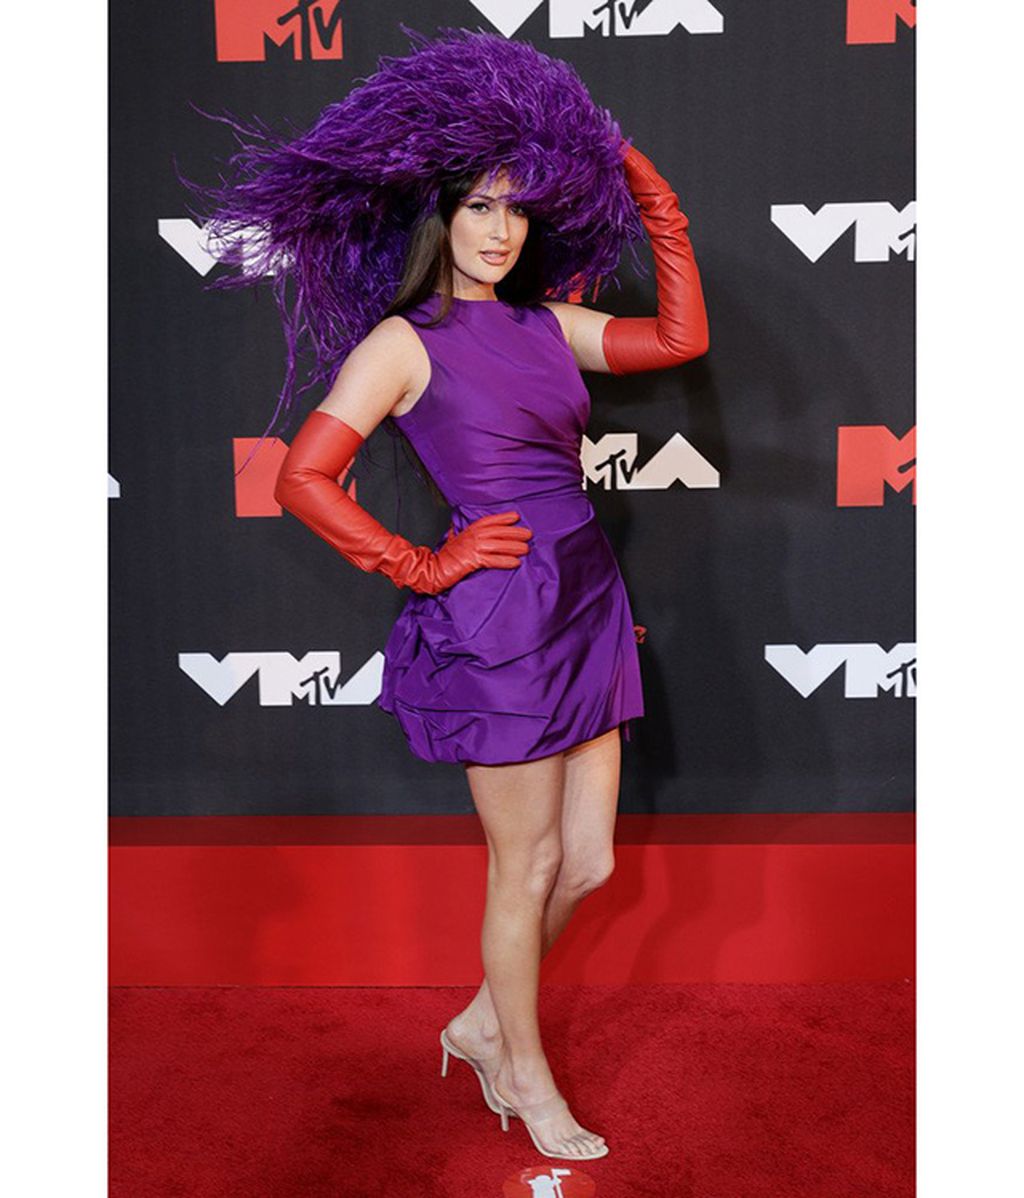 JLo, Madonna, Justin Bieber... La alfombra roja de los MTV VMAs 2021, foto a foto